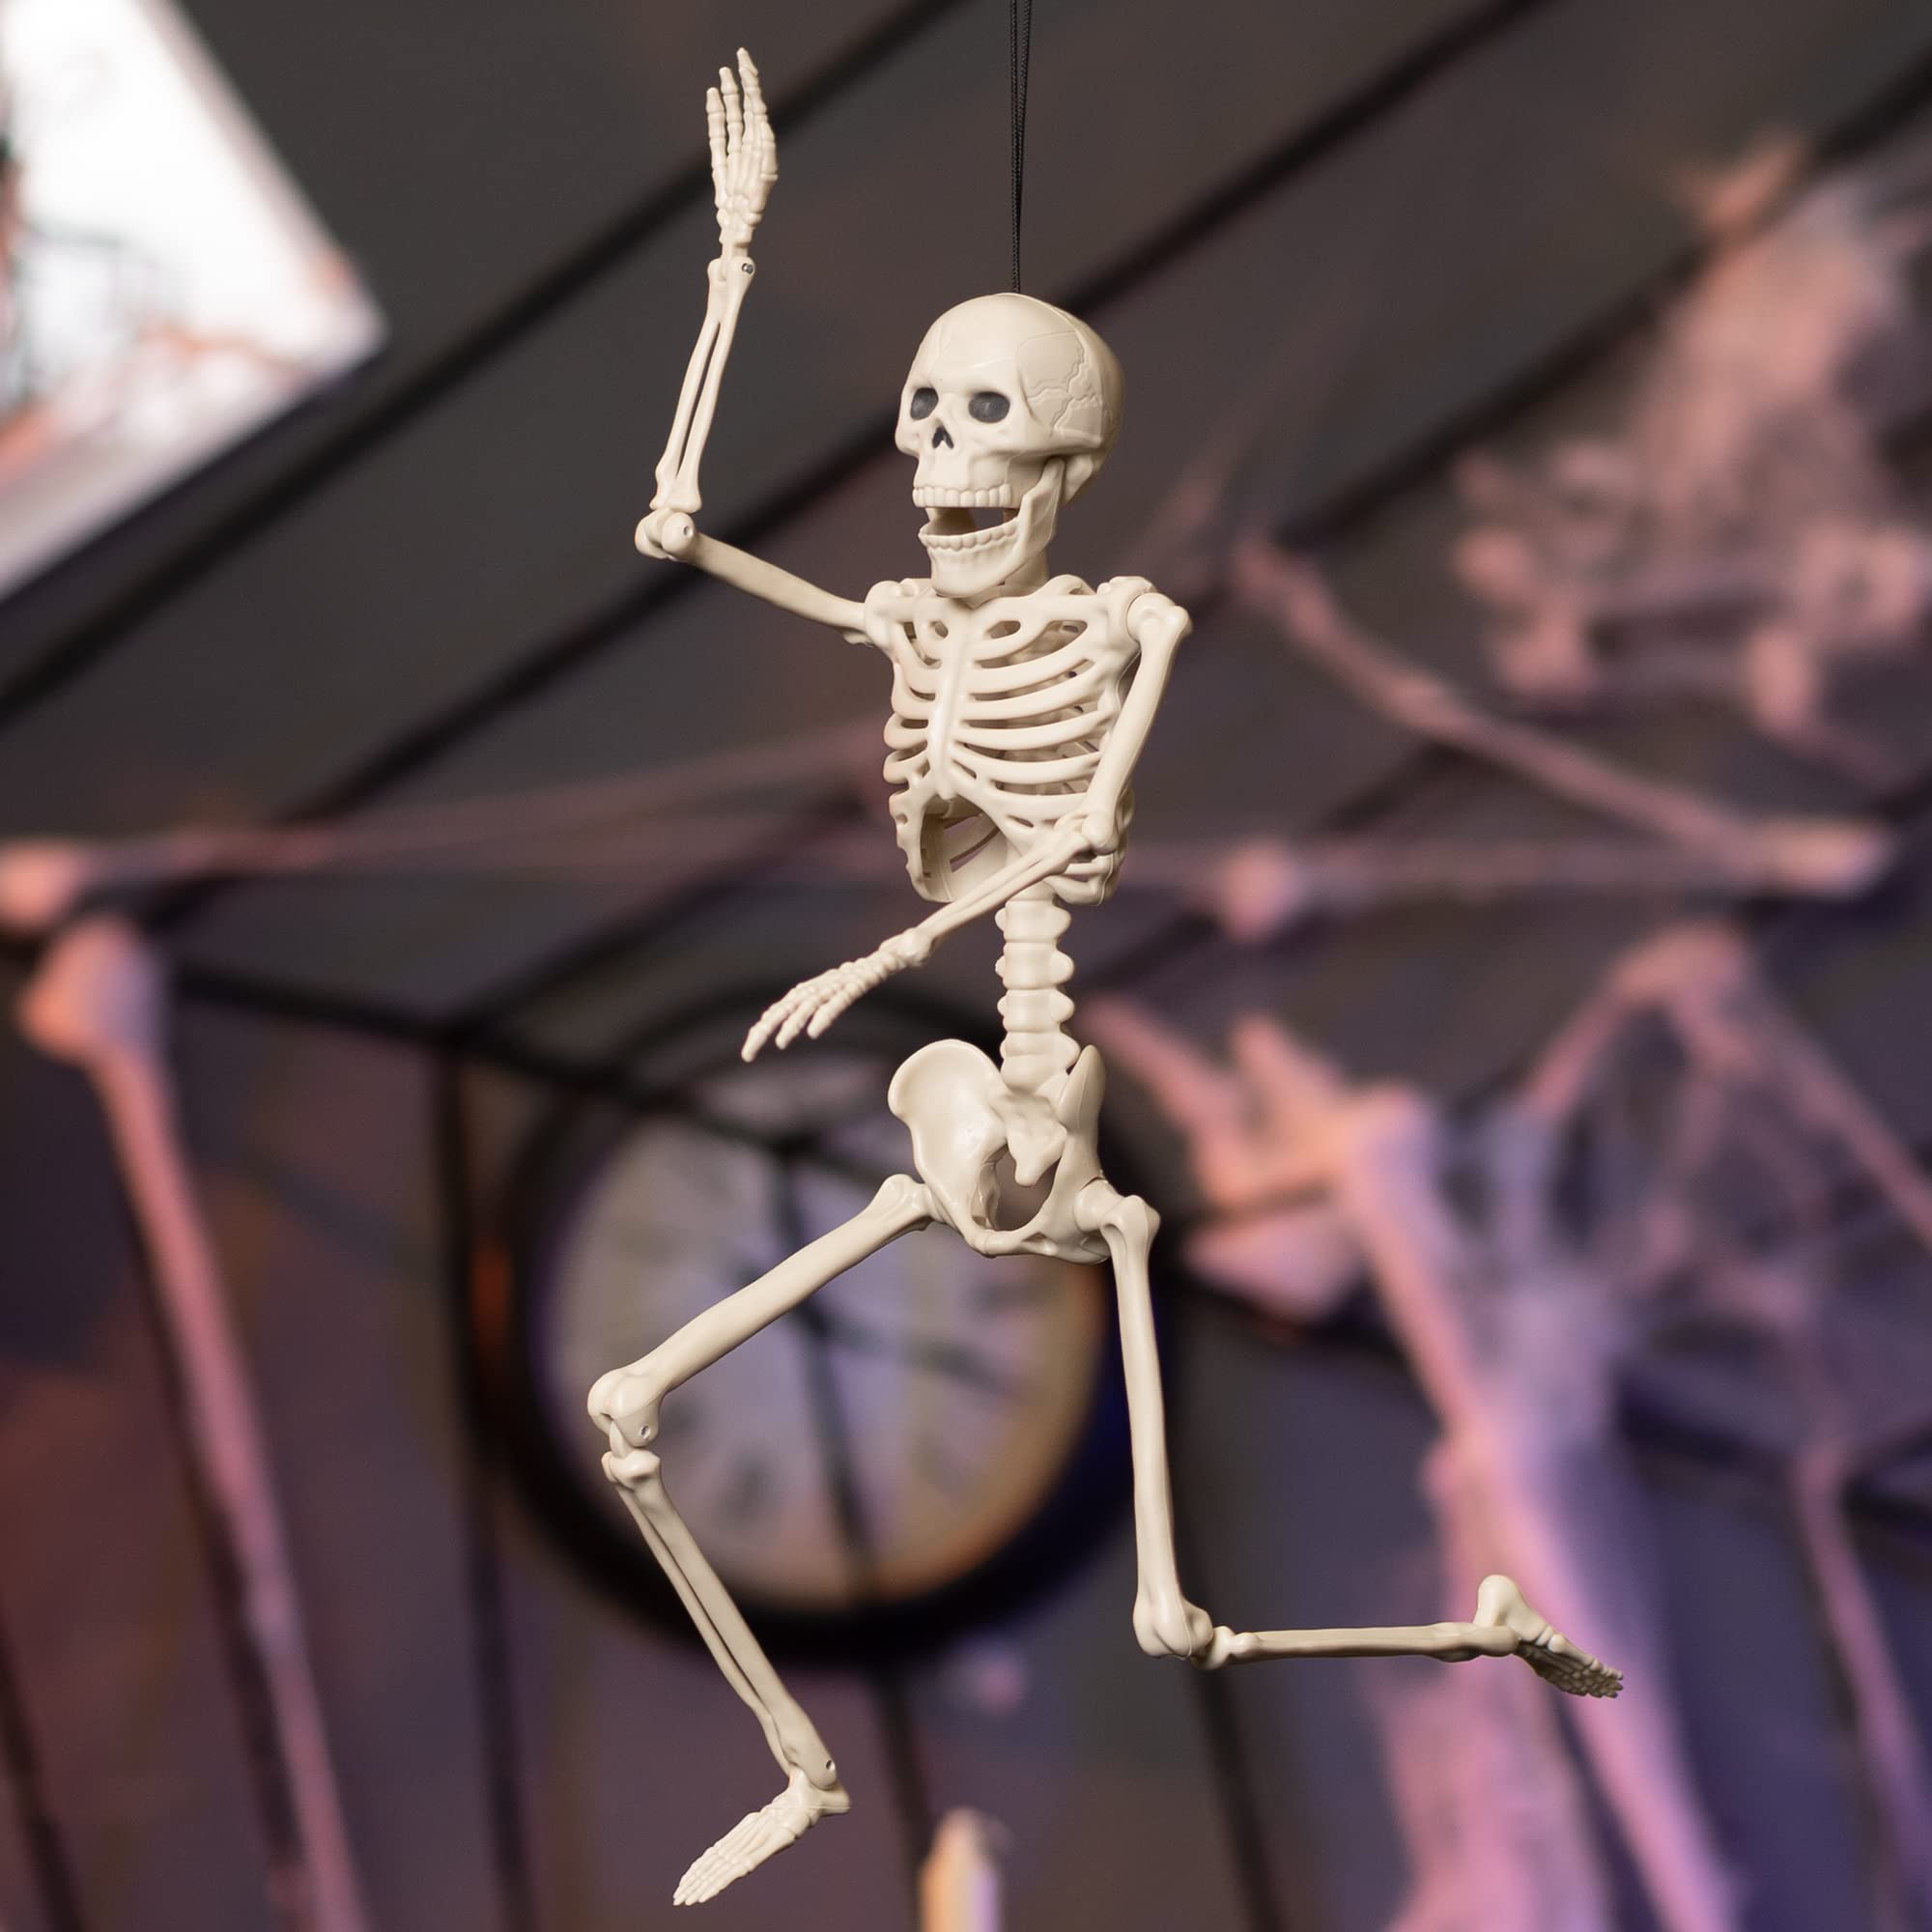 JOYIN Posable Halloween Skeletons, Full Body Posable Joints Skeletons 5 Packs for Halloween Decoration, Graveyard Decorations, Haunted House Accessories, Indoor/Outdoor Spooky Scene Party Favors